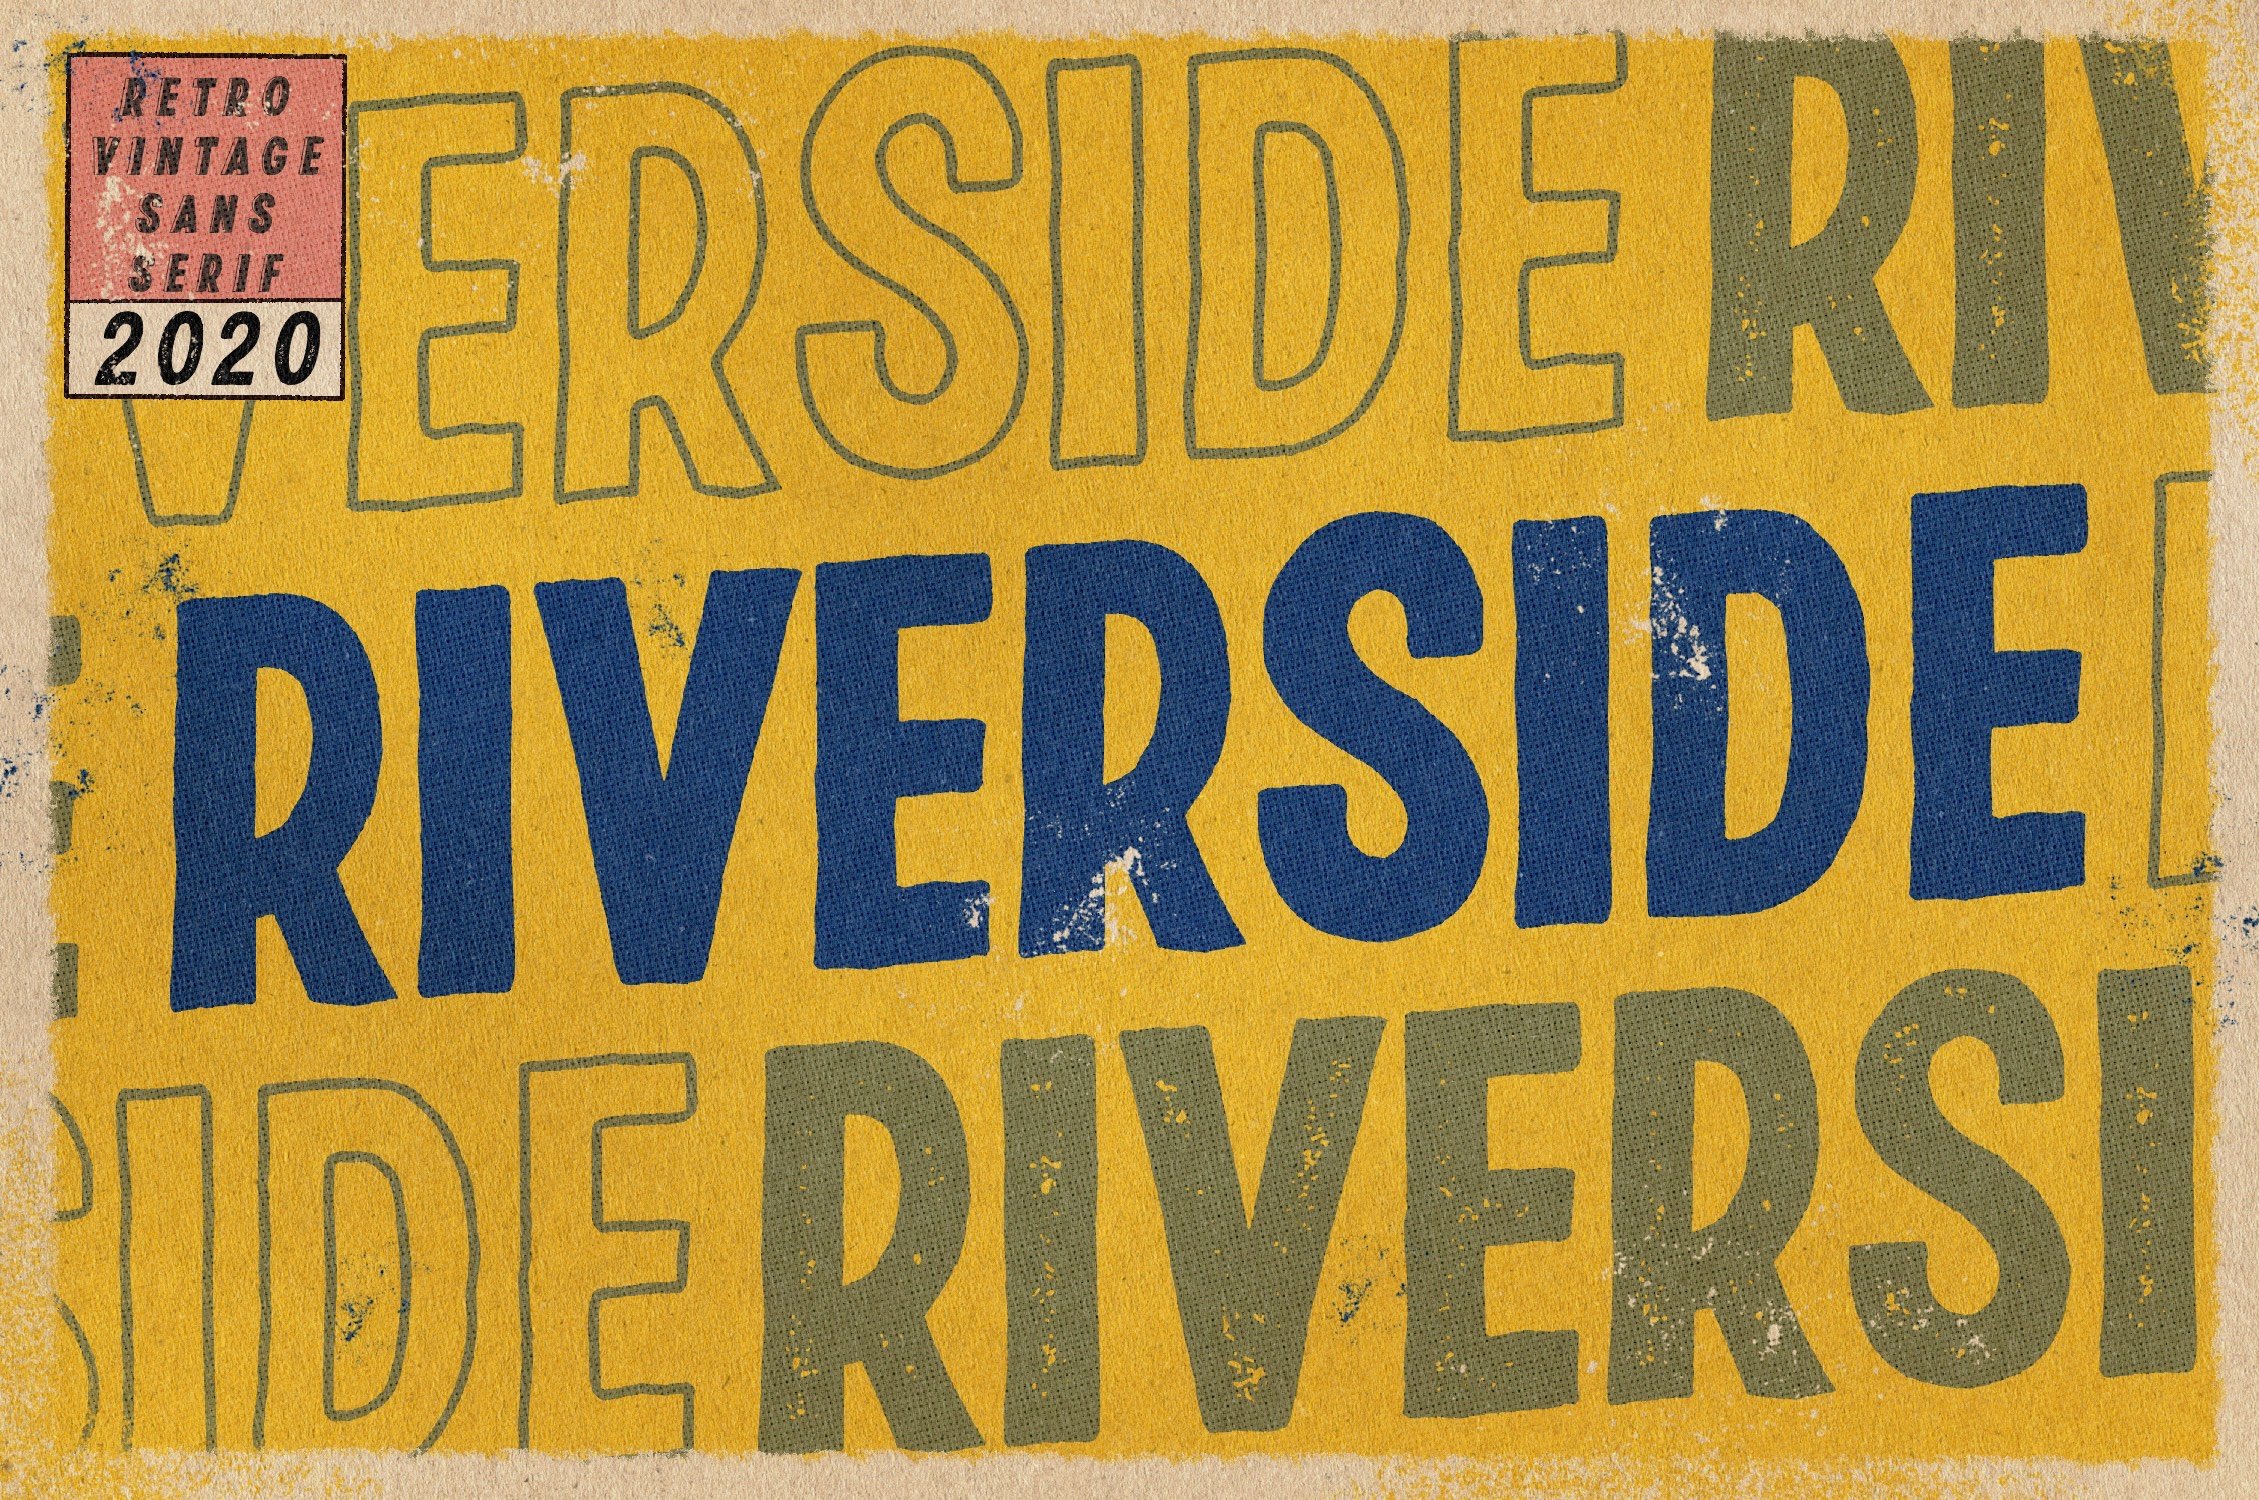 RIVERSIDE | Retro Sans Serif cover image.